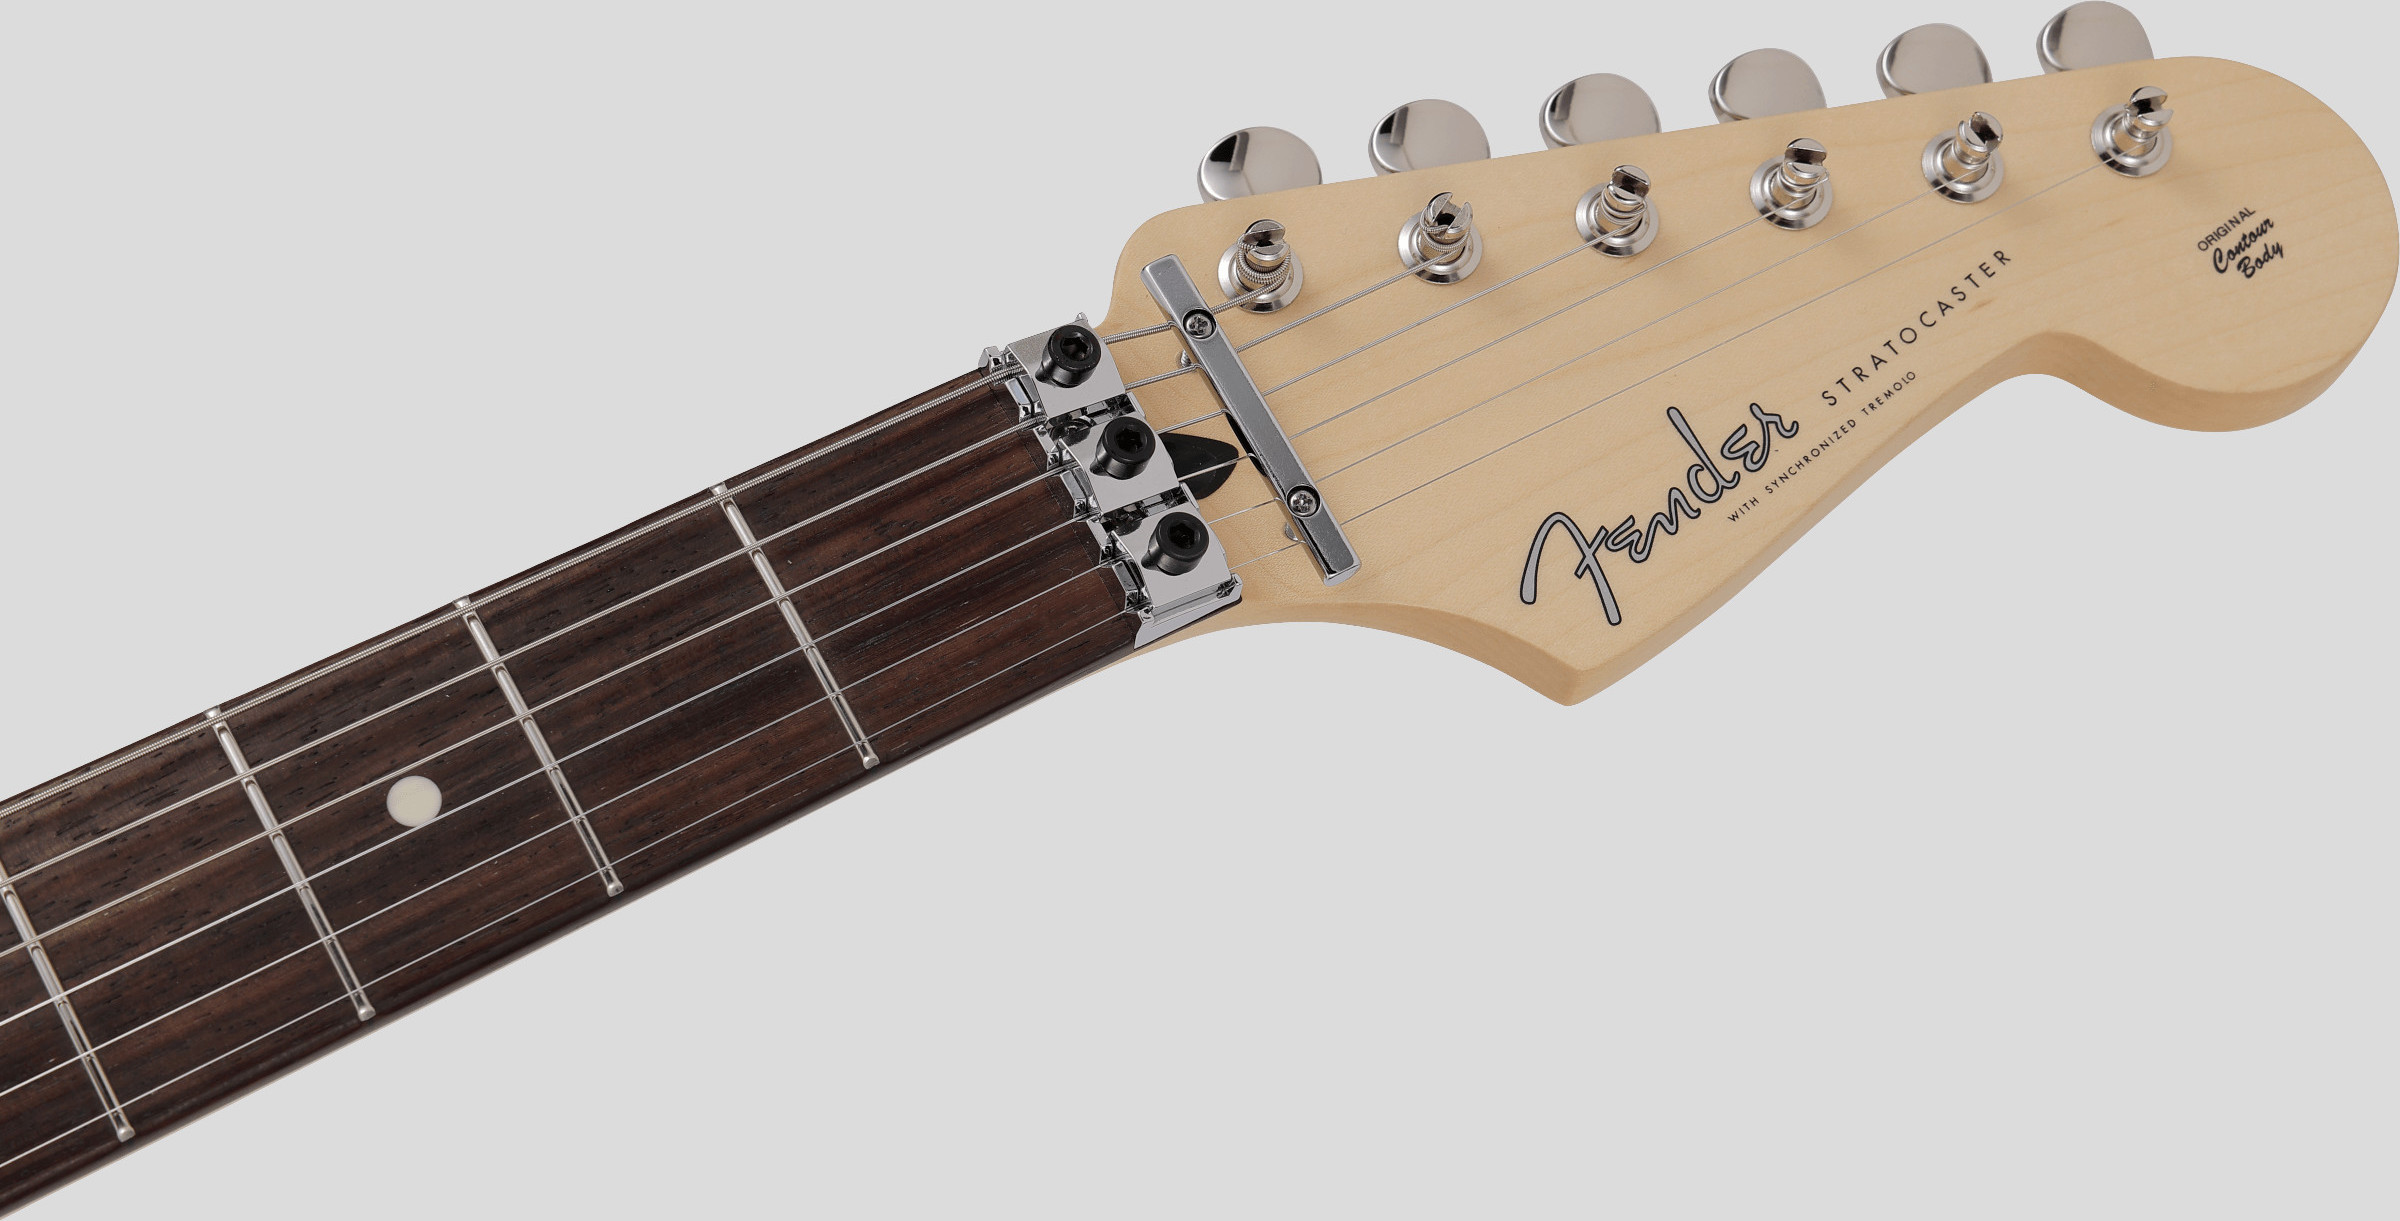 Fender Limited Edition Stratocaster Floyd Rose Vintage White 5